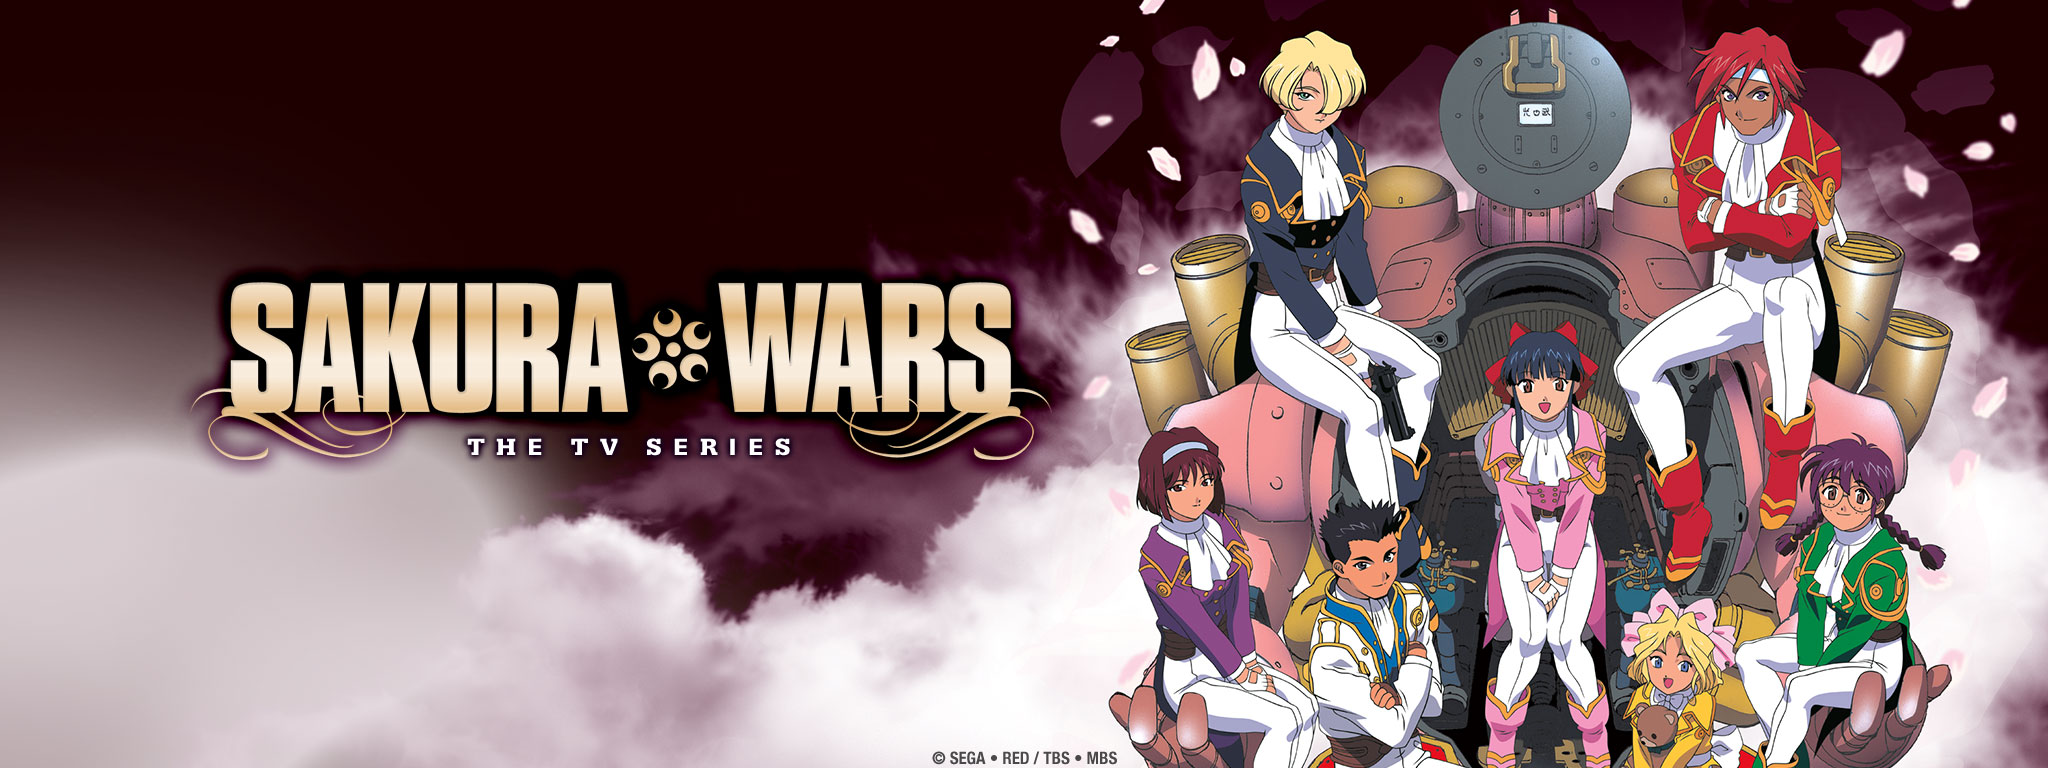 Title Art for Sakura Wars